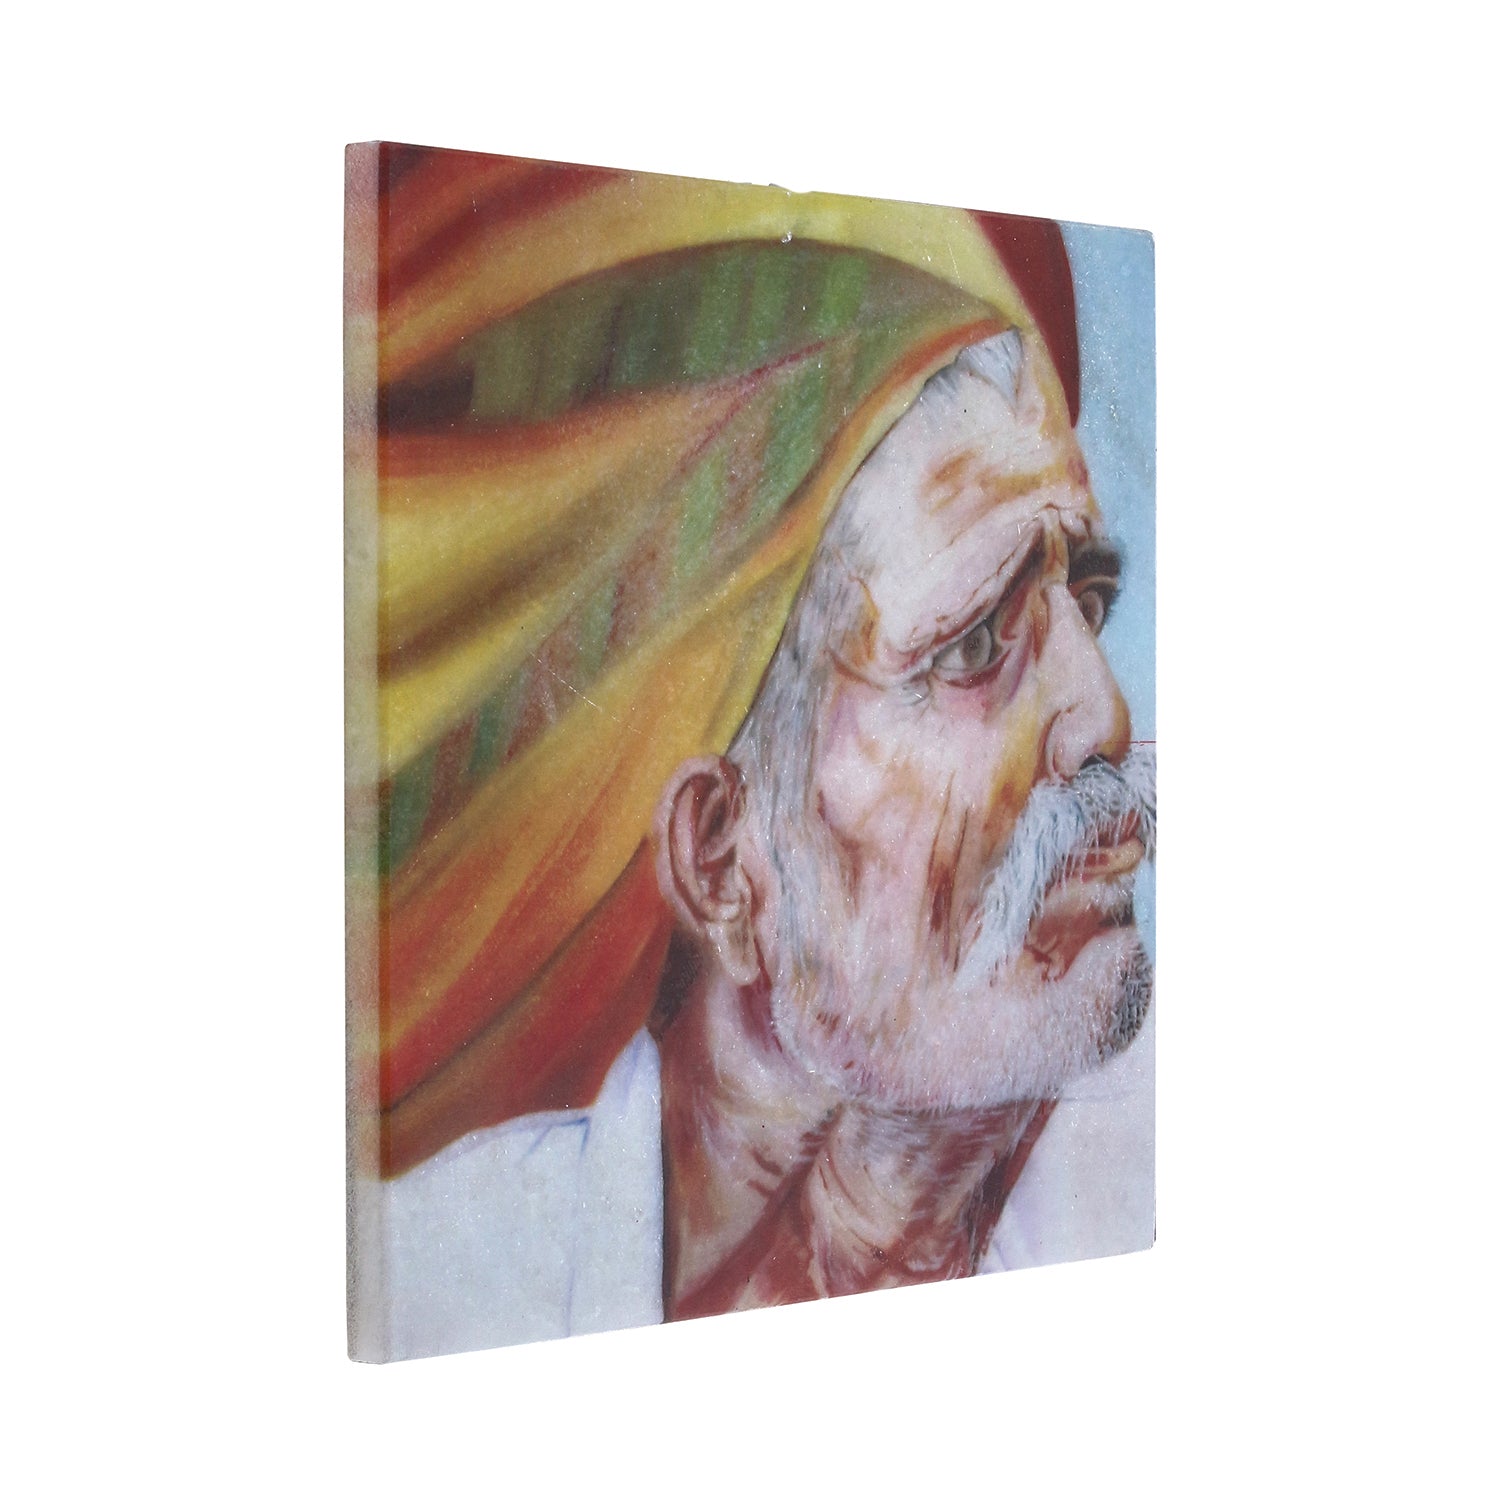 Rajasthani Old Man Wearing Turban Painting On Marble Square Tile 3